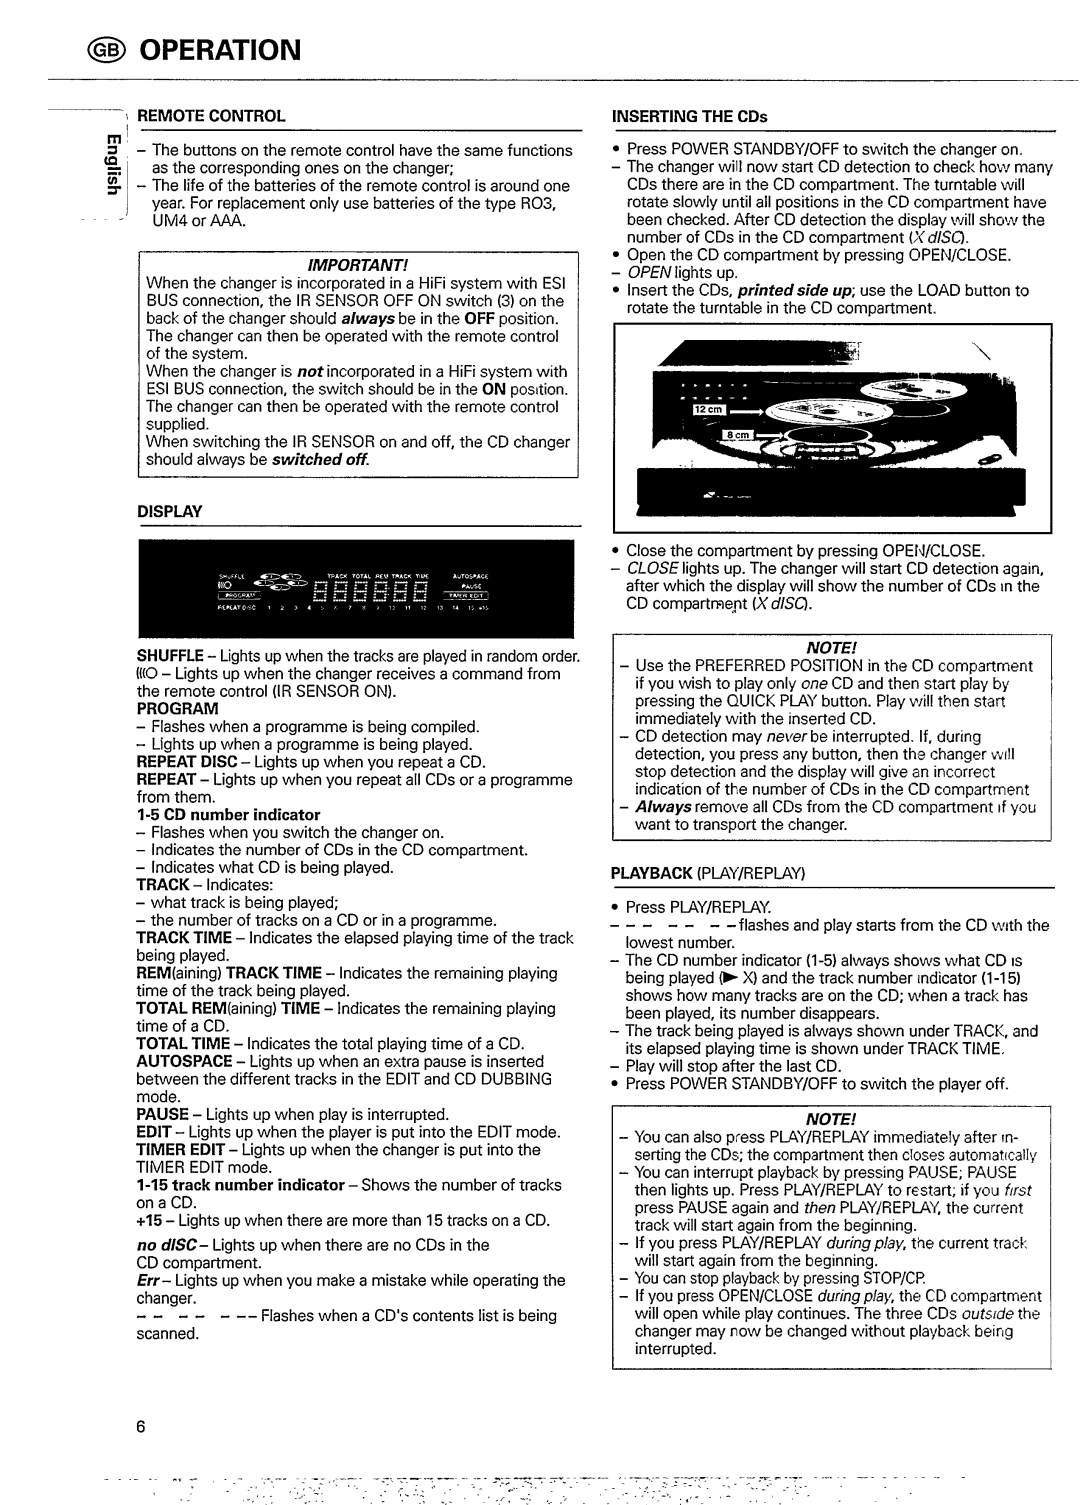 Philips CDC 925/20S manual 